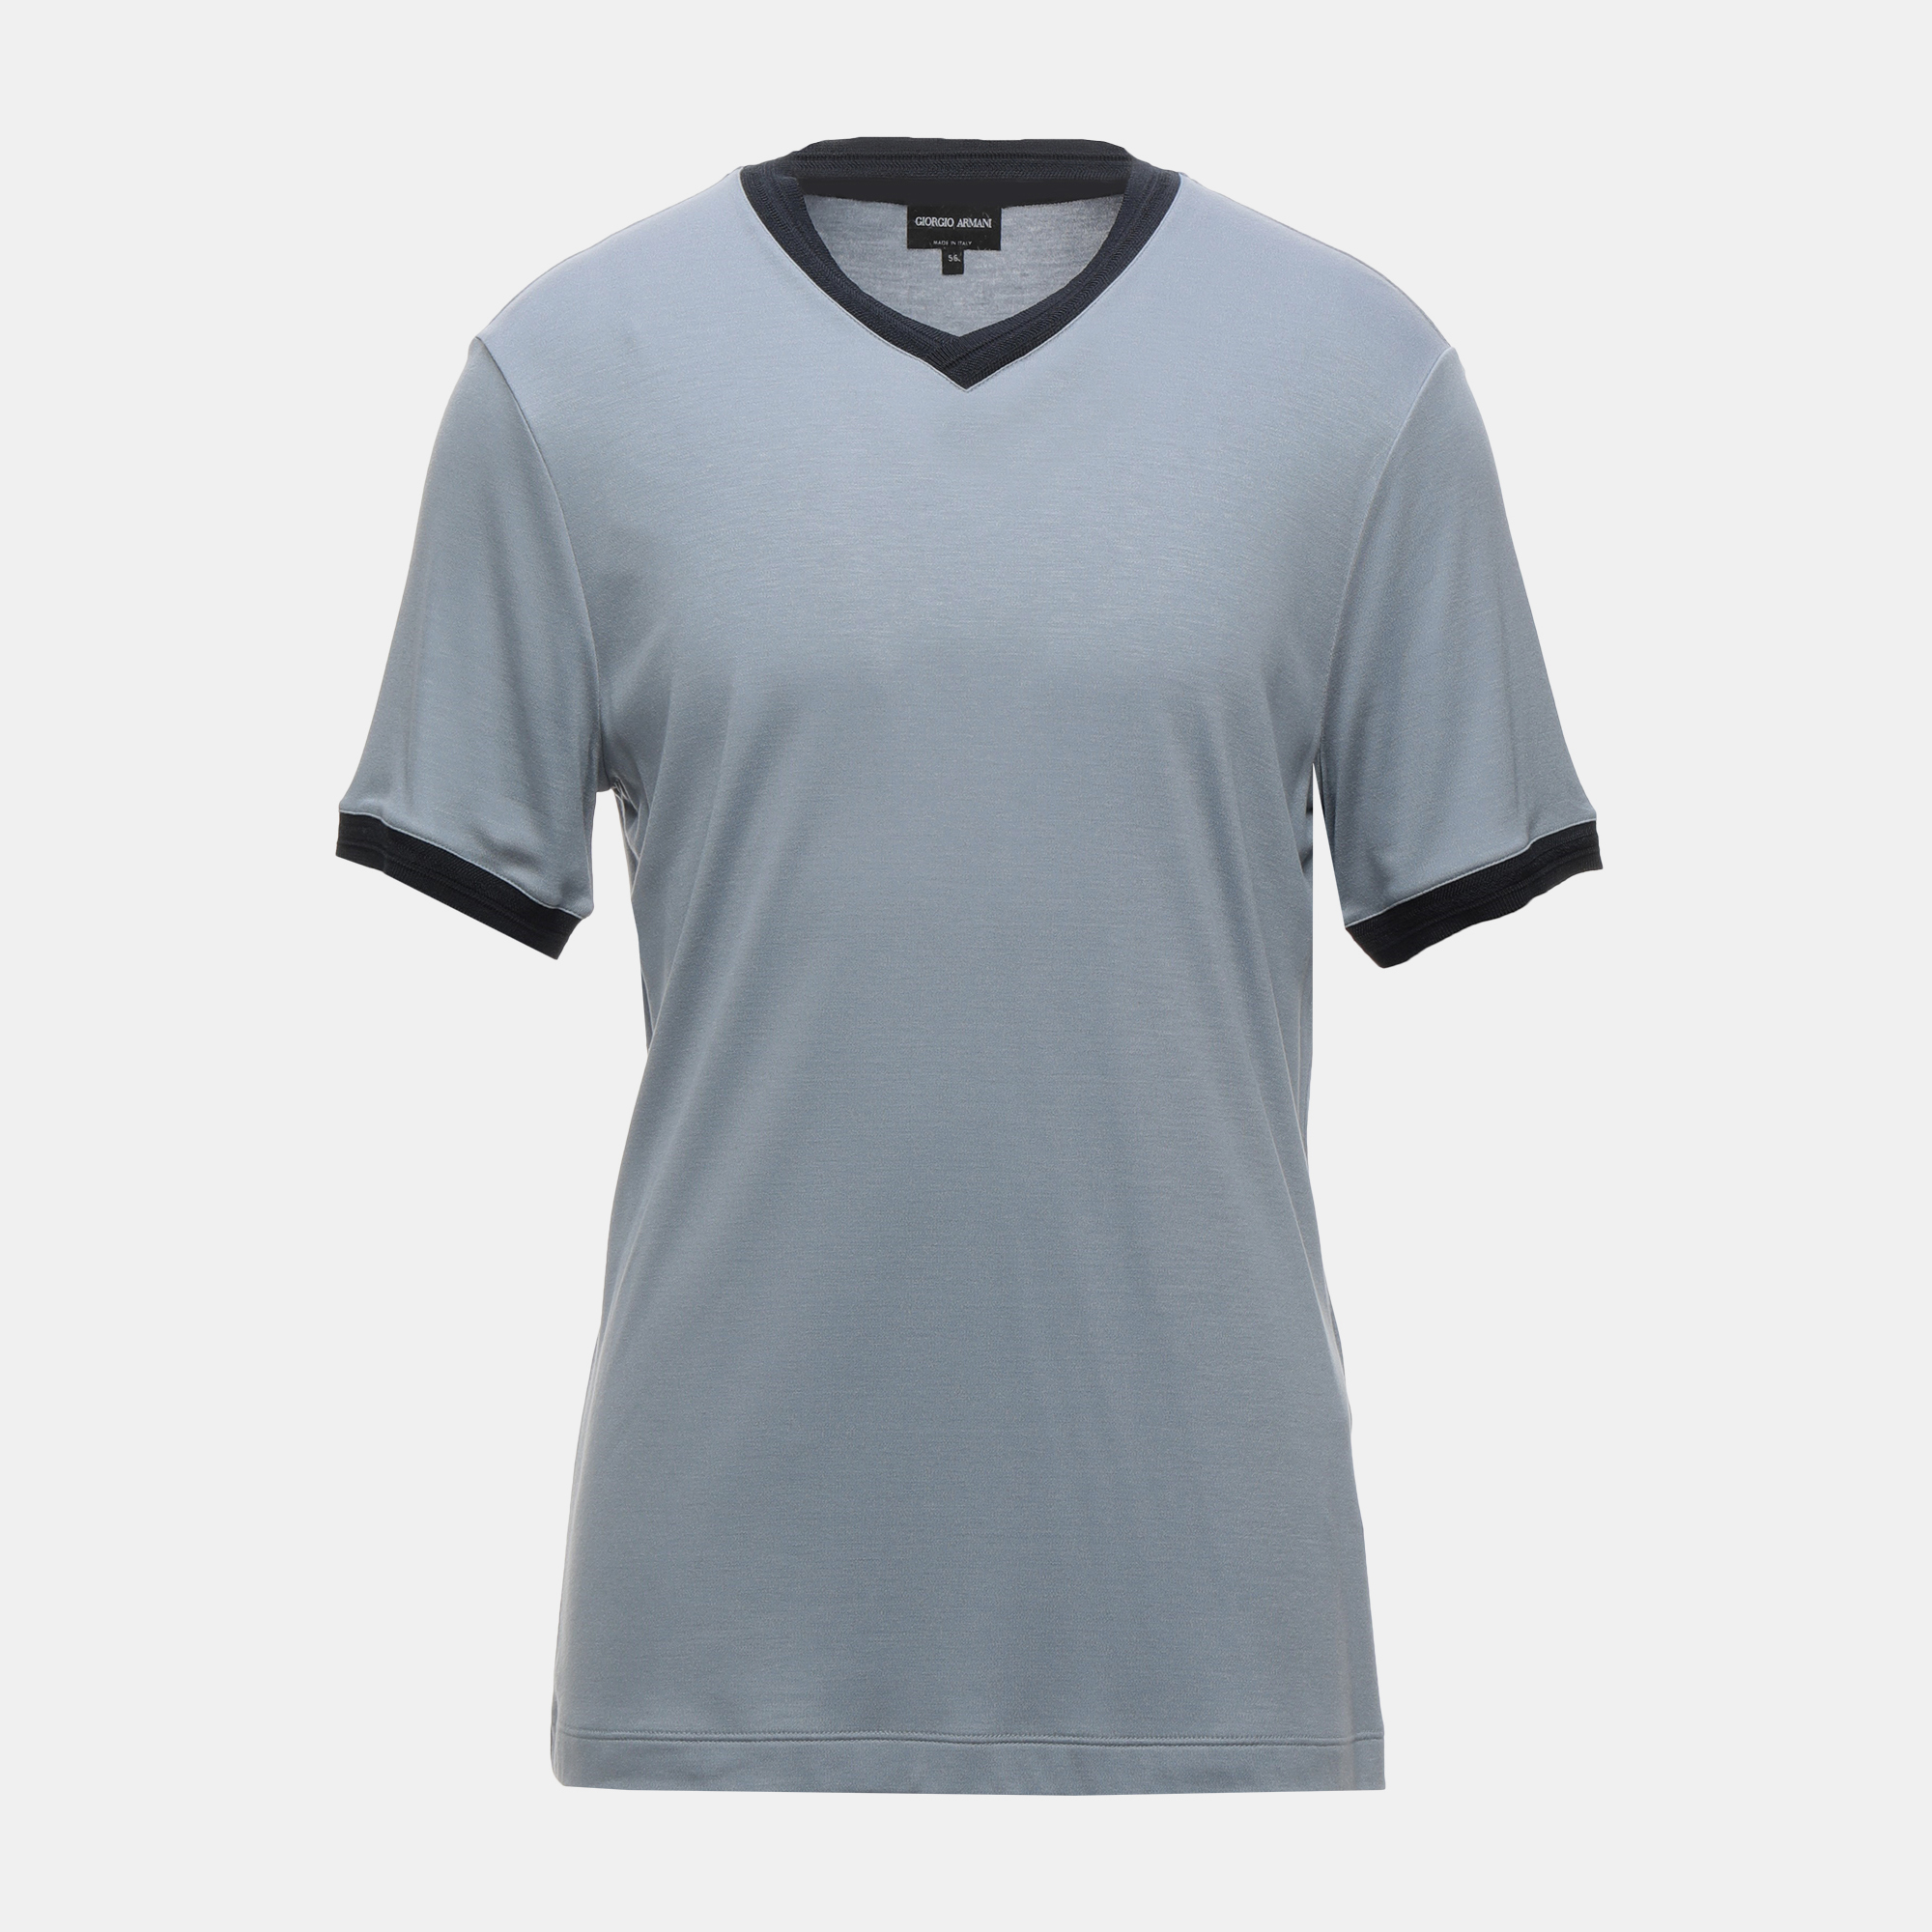 Giorgio armani blue jersey t-shirt size 50